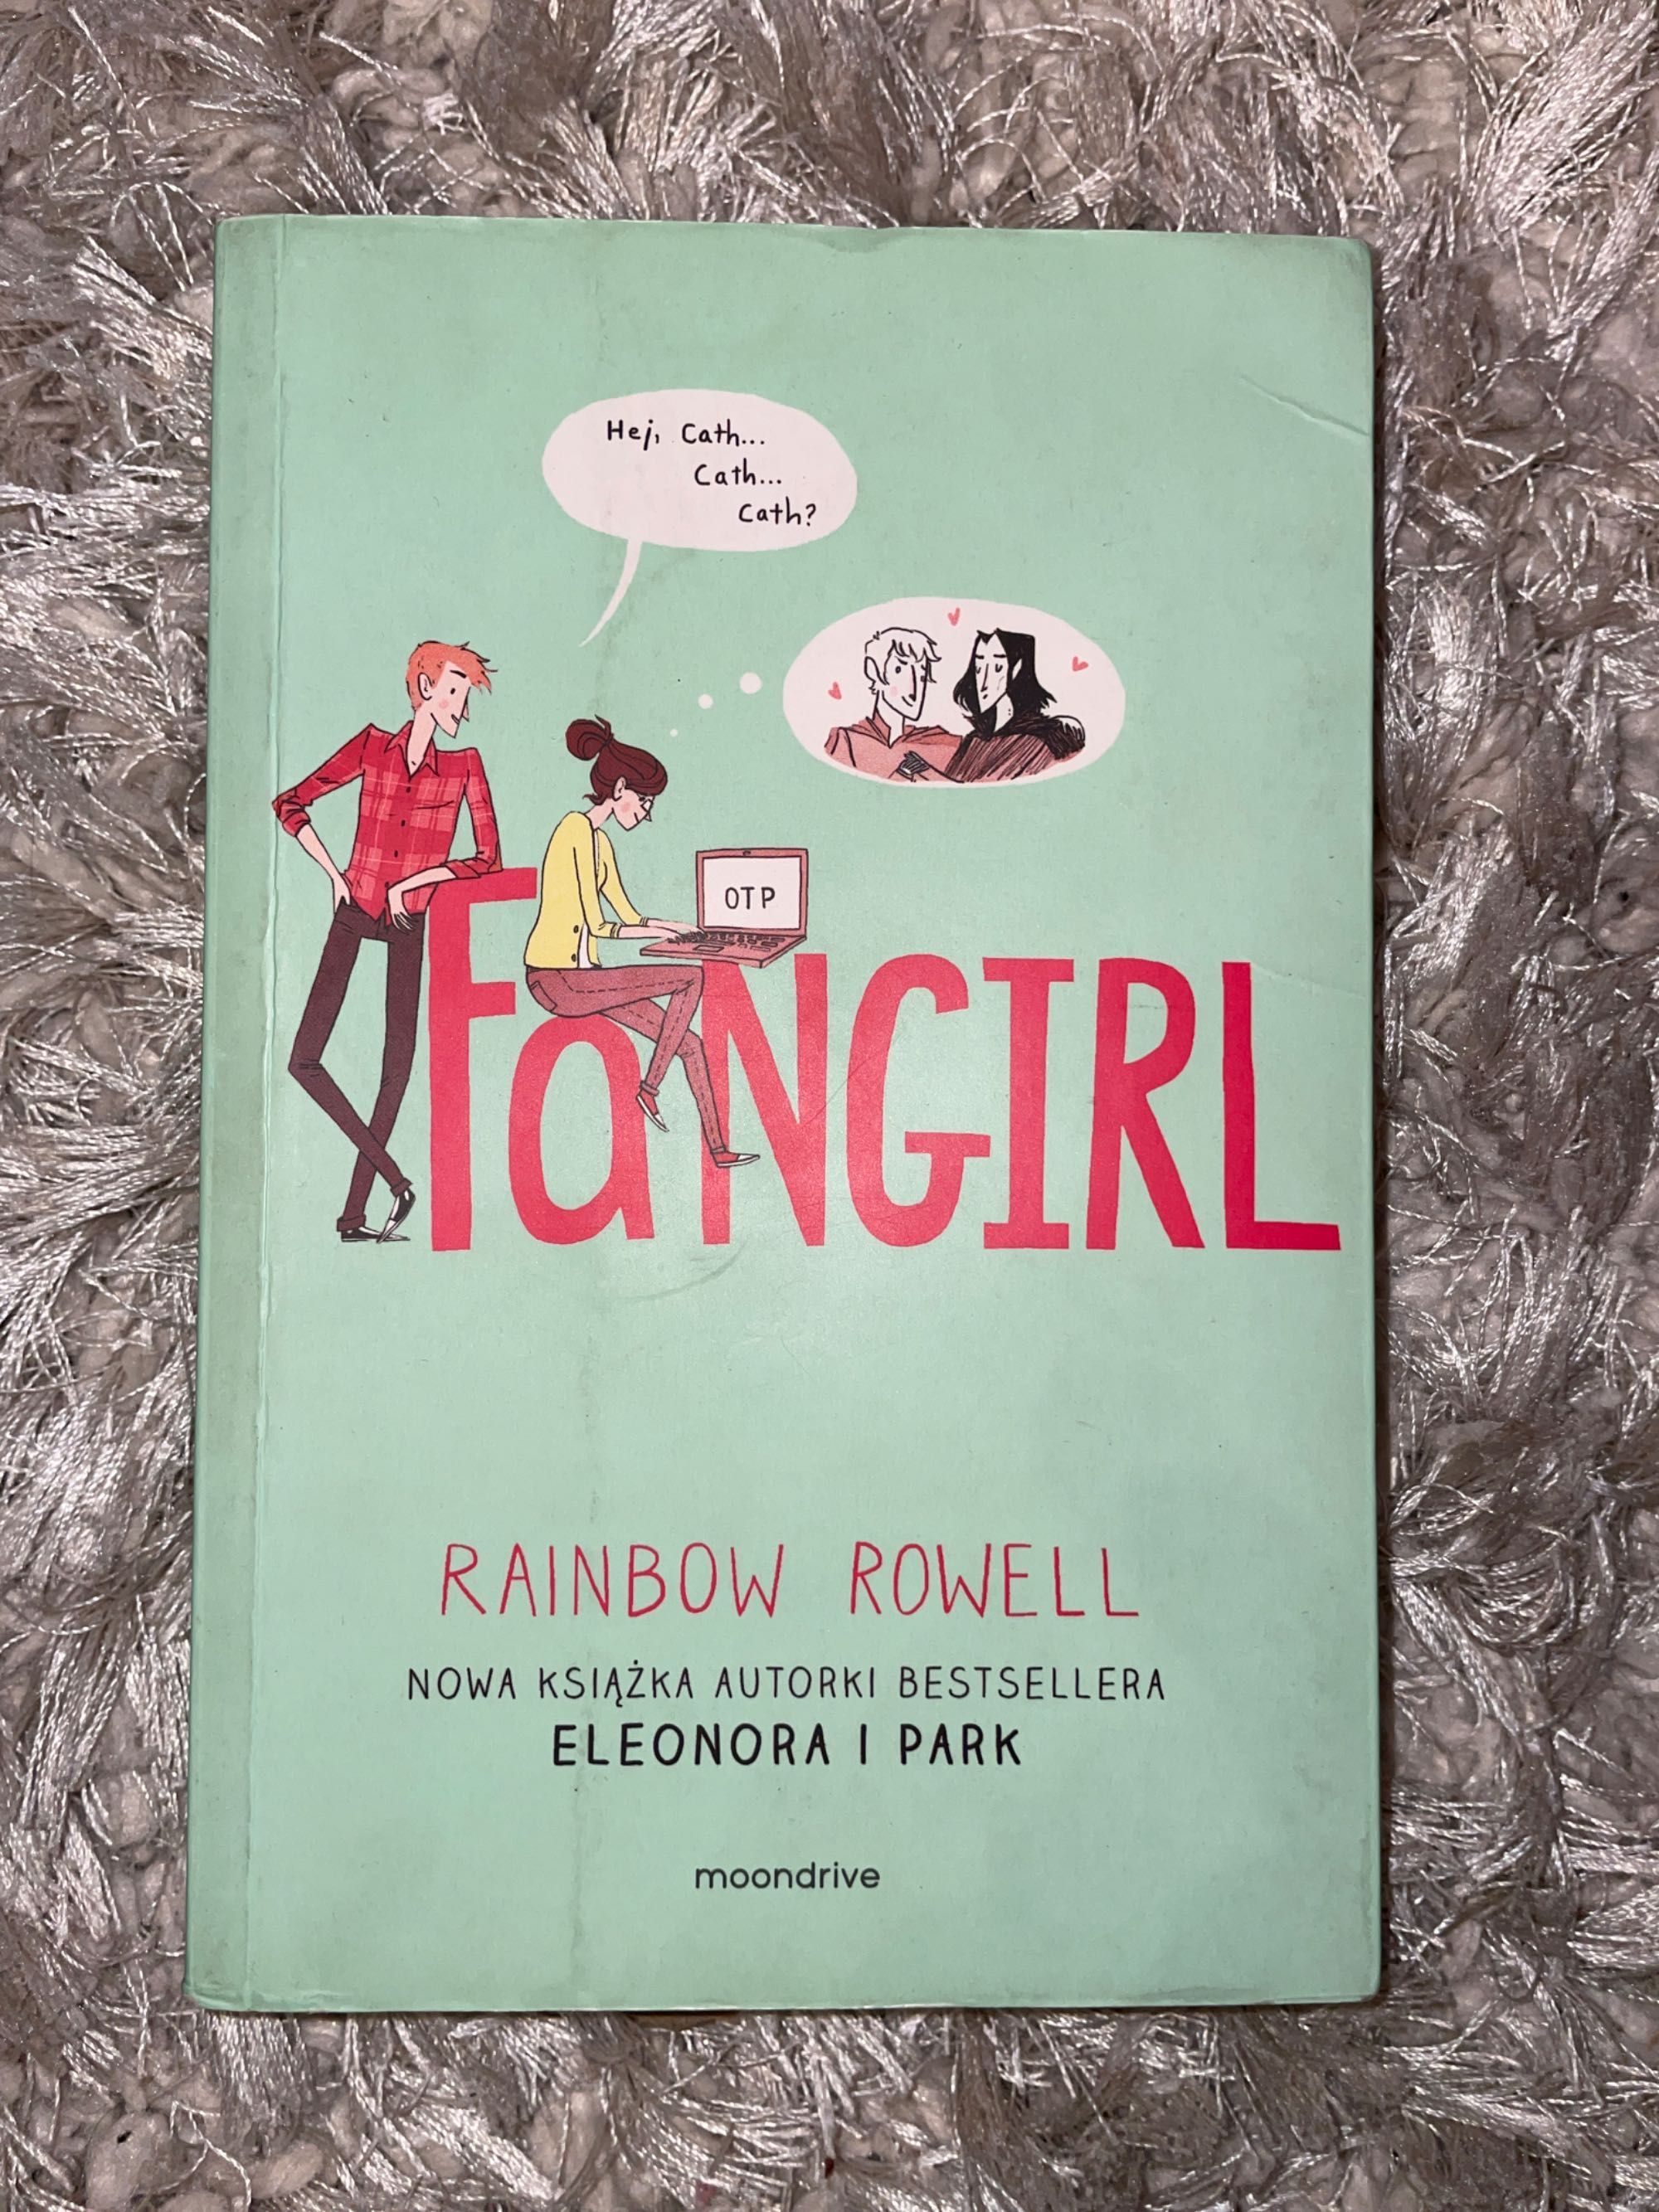 ~FanGirl - Rainbow Rowell~